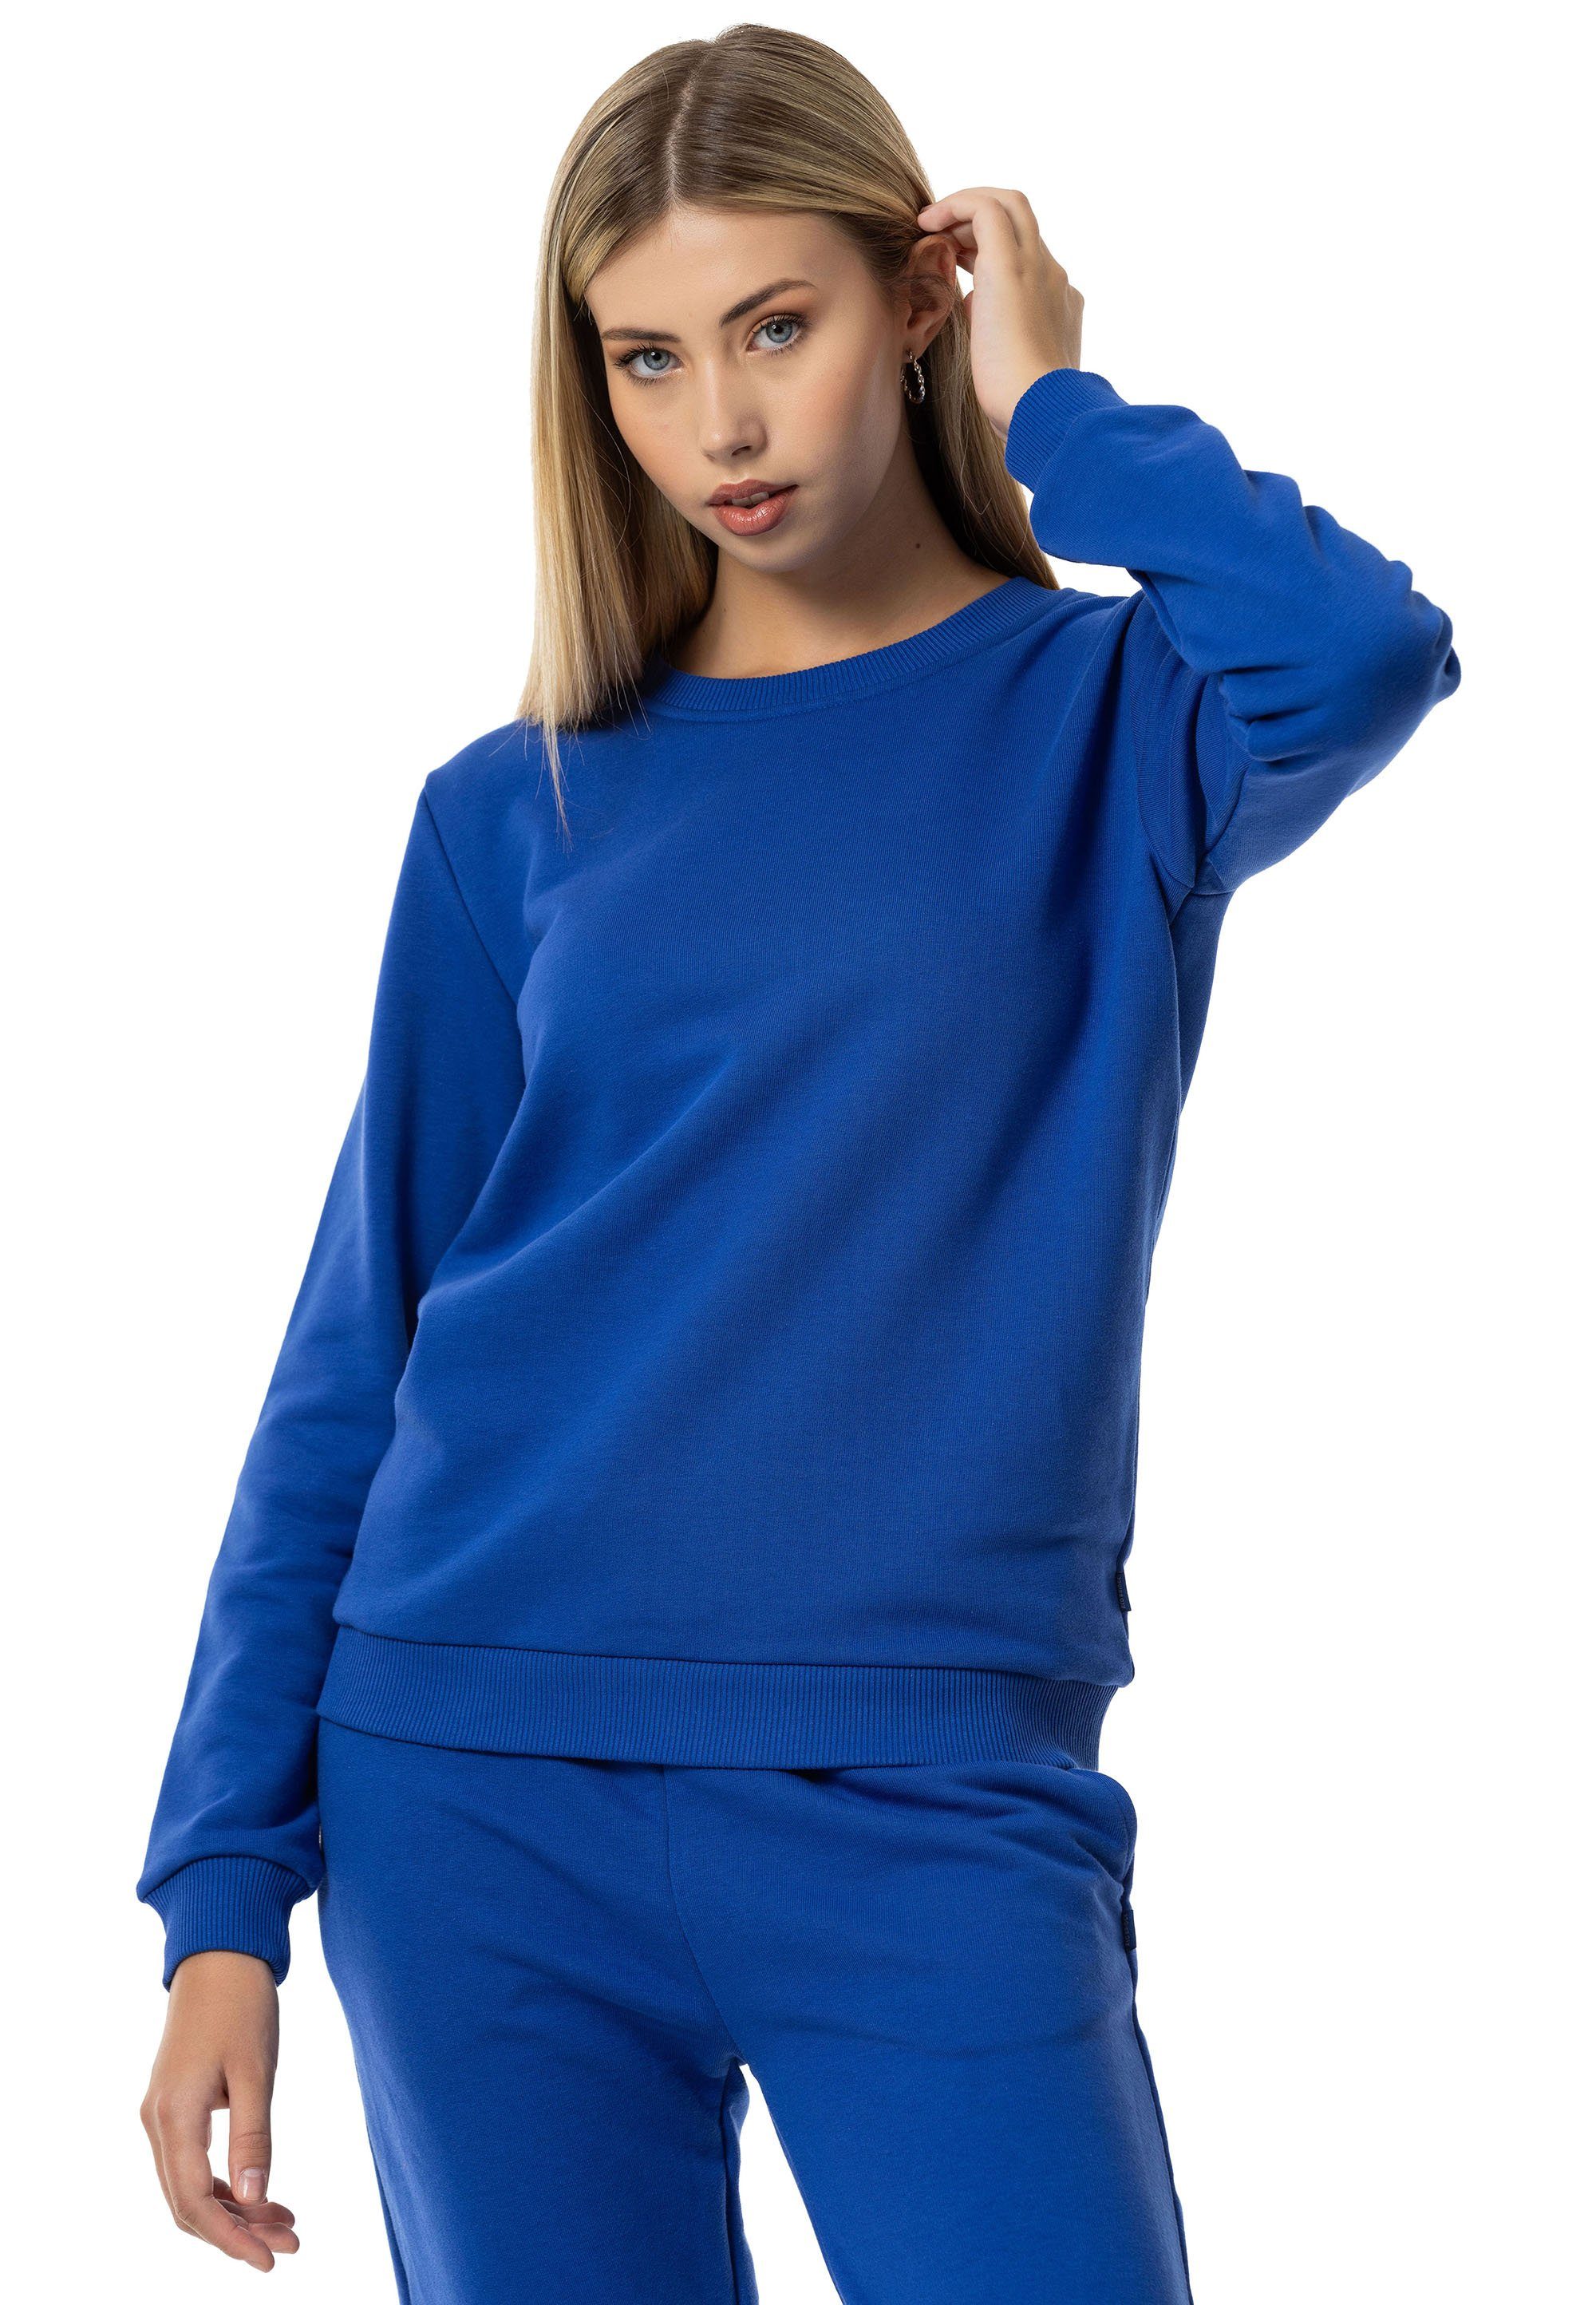 Rundhals Sweatshirt Saxeblau Premium RedBridge Pullover Qualität